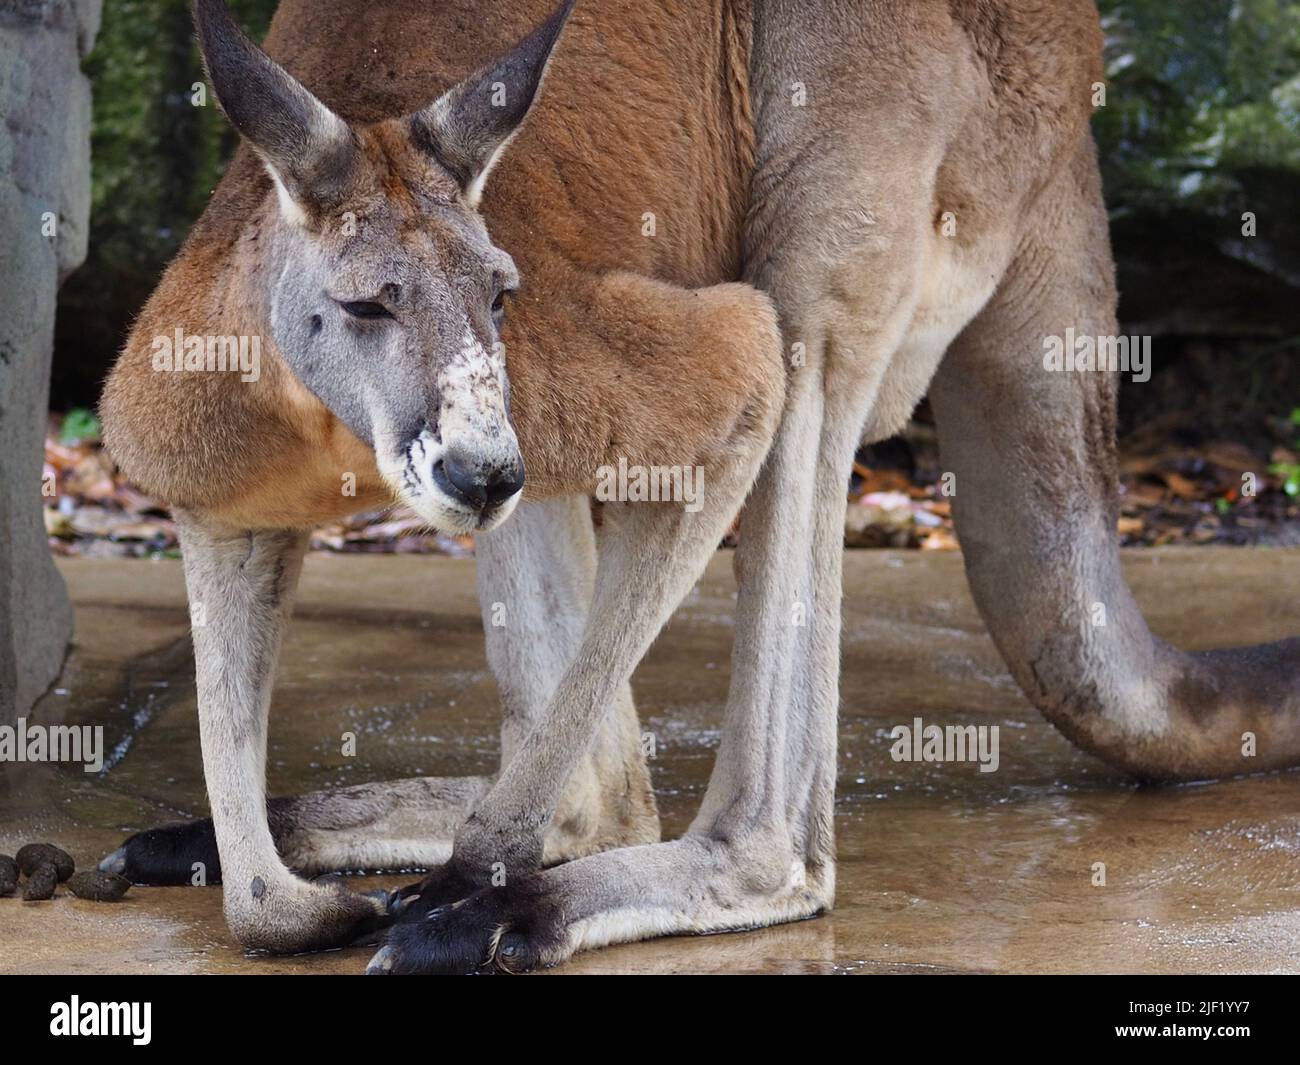 Dynamic robust handsome male Red Kangaroo in vigorous health. Stock Photo